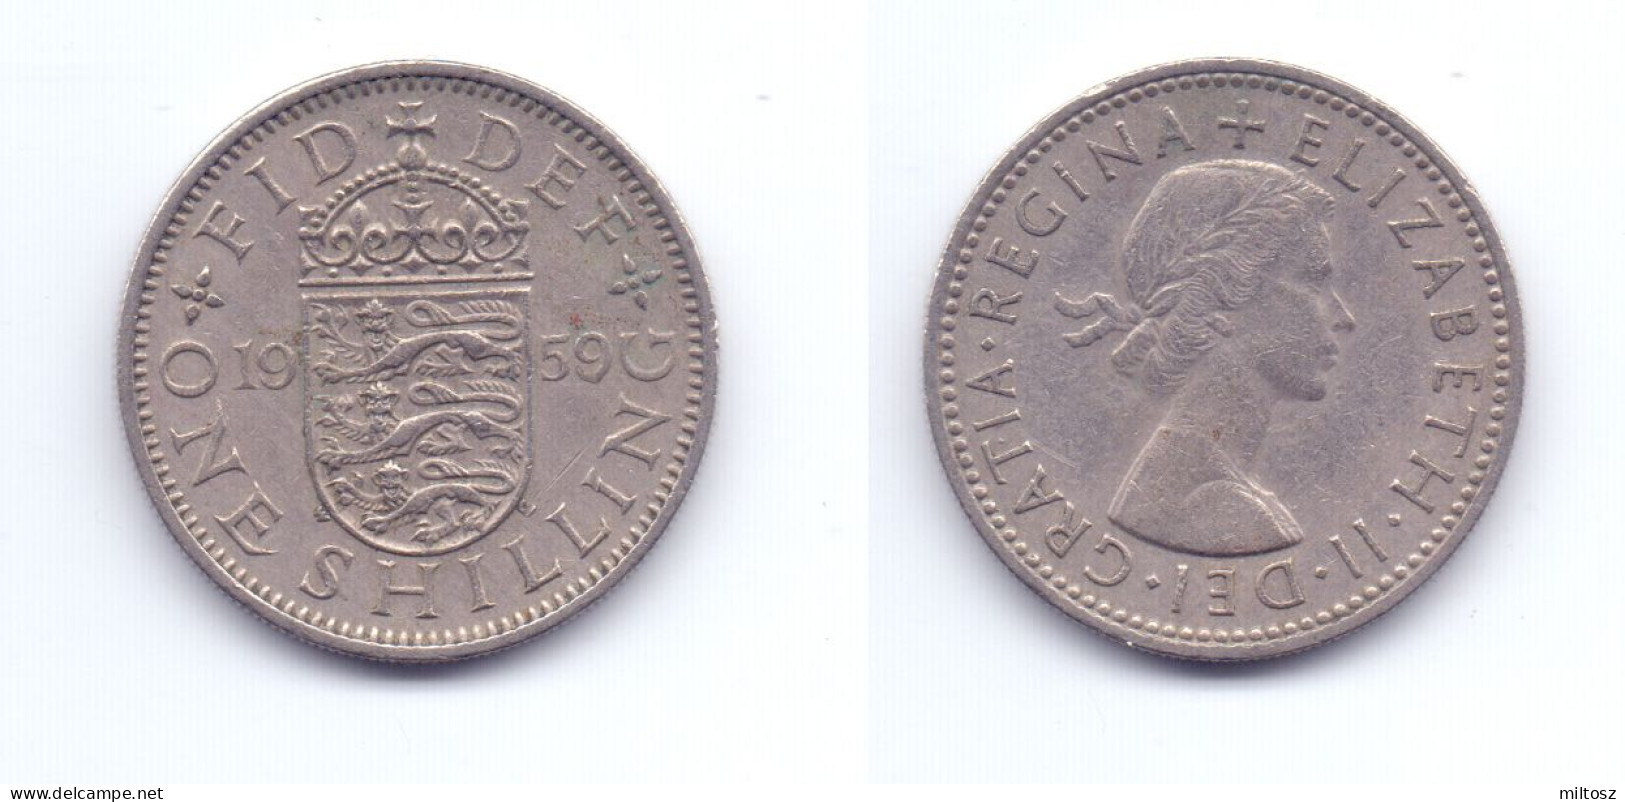 Great Britain 1 Shilling 1959 English Crest - I. 1 Shilling